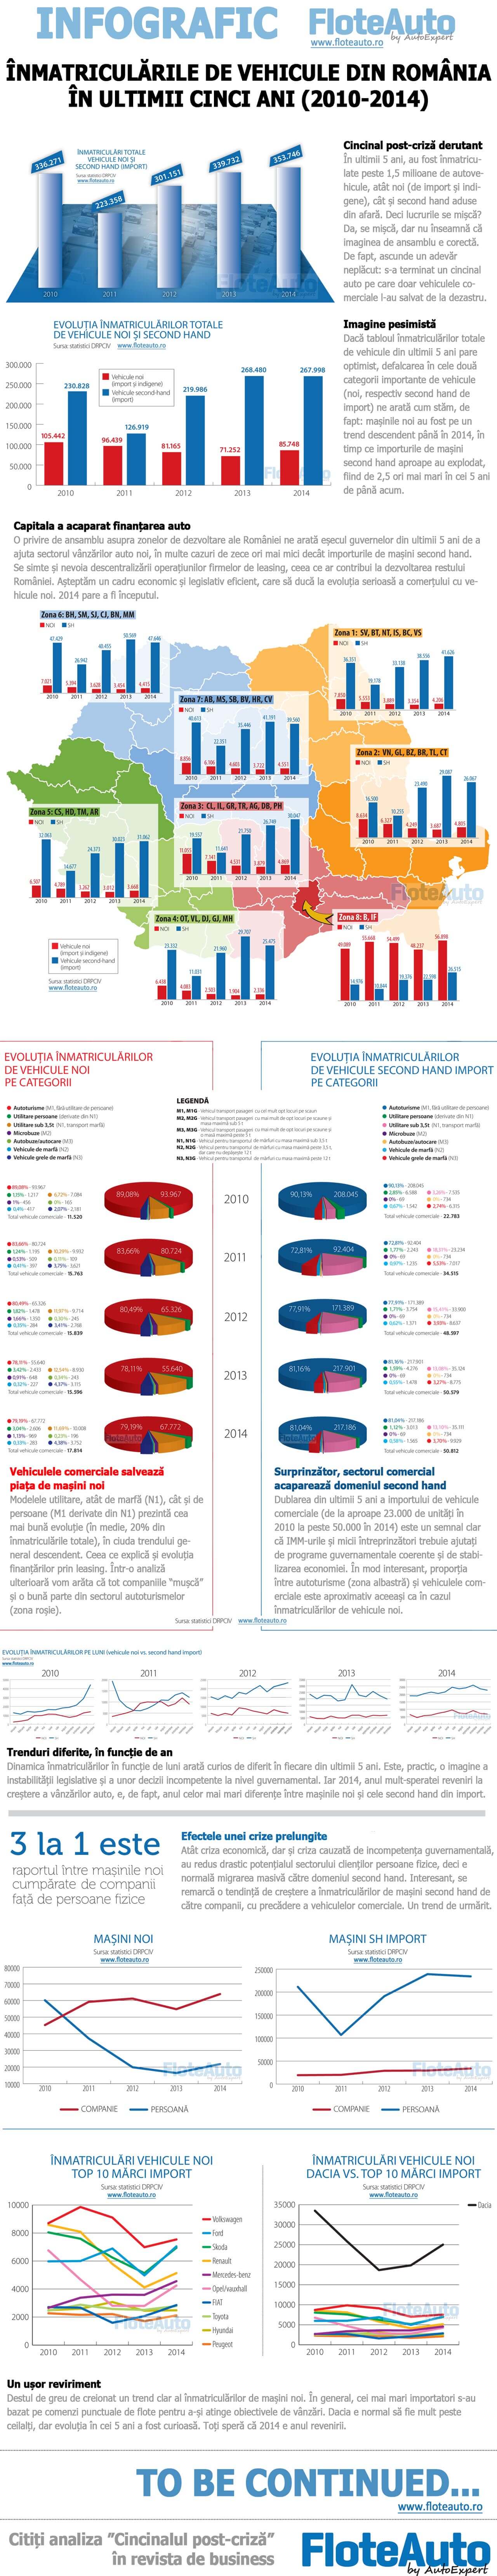 Infografic Inmatricularile auto din Romania (2010-2014)